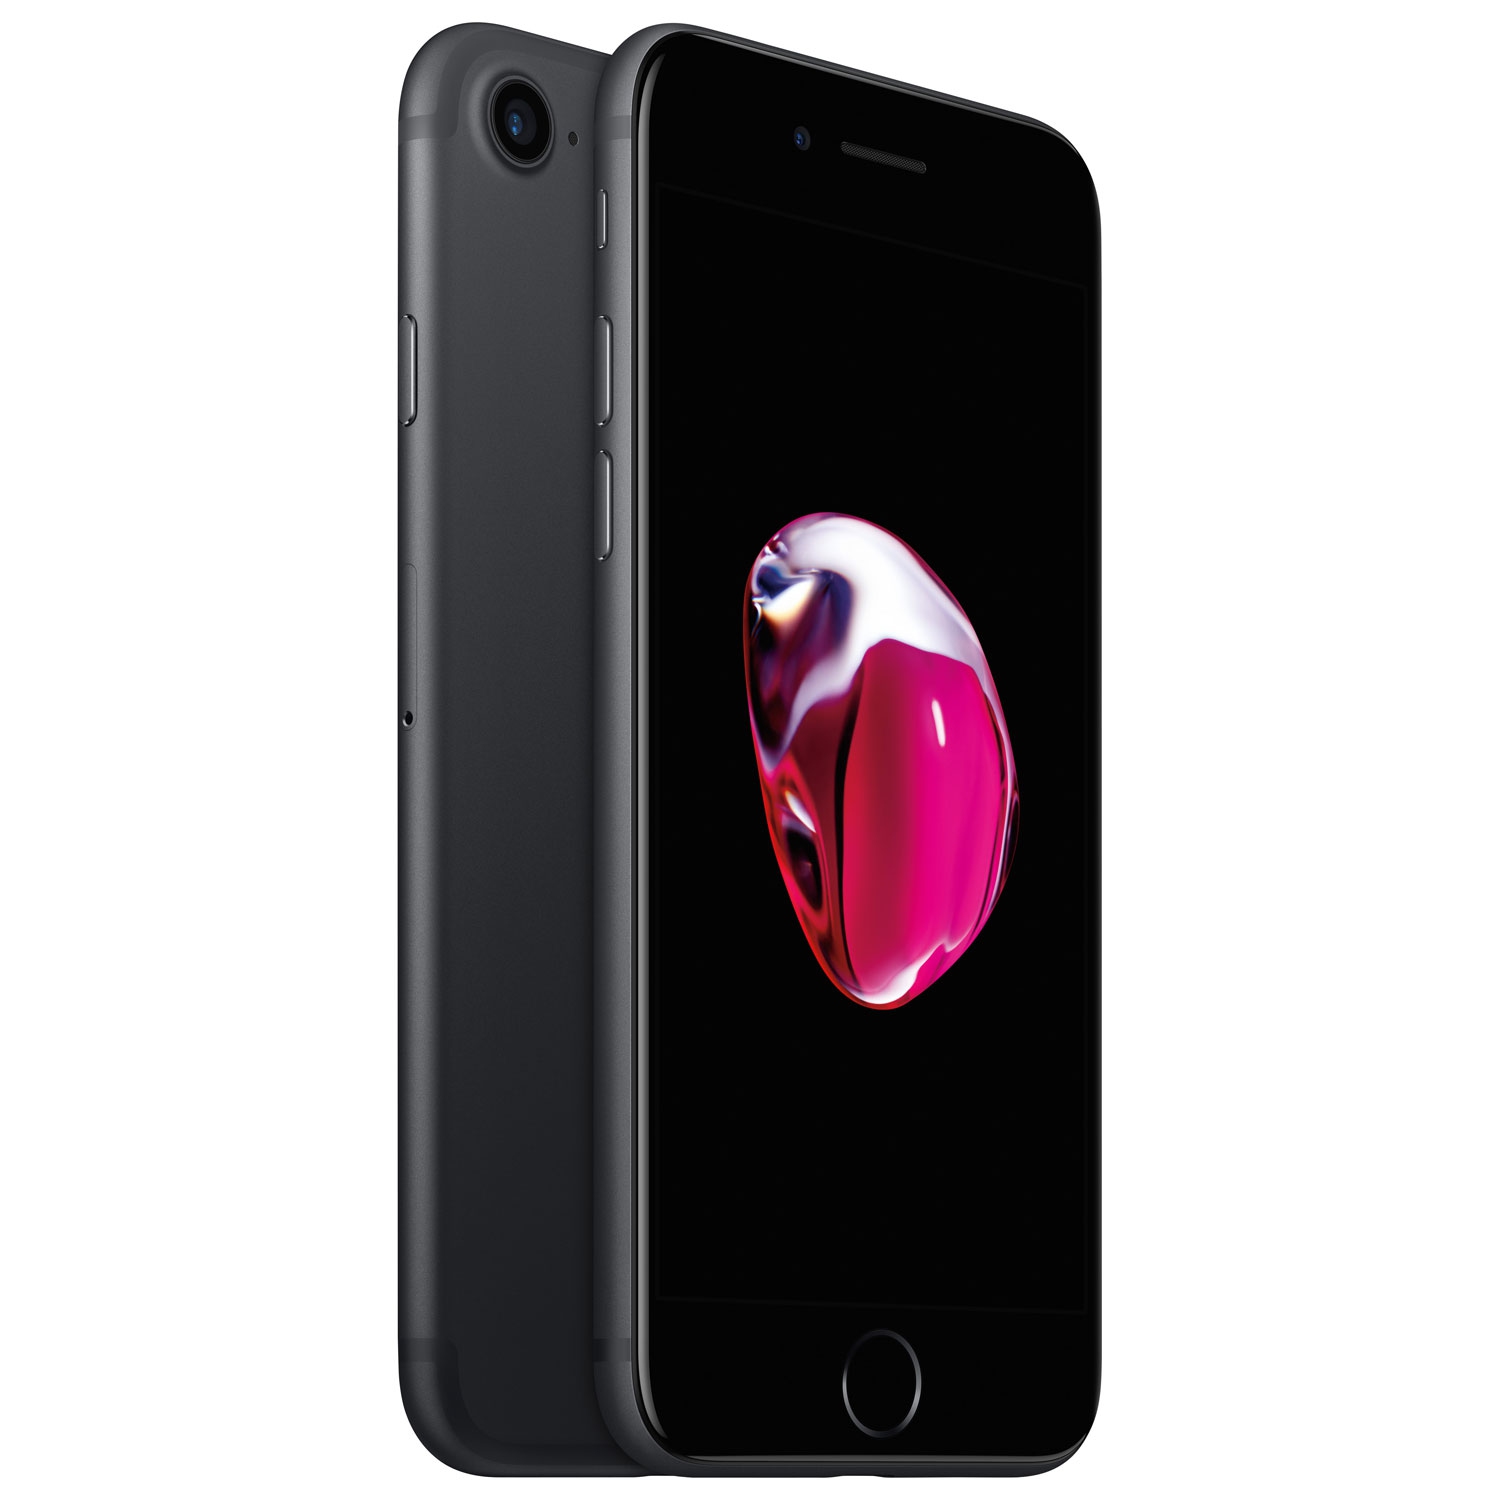 Refurbished (Excellent) - Apple iPhone 7 256GB Smartphone - Black - Unlocked - Certified Refurbished